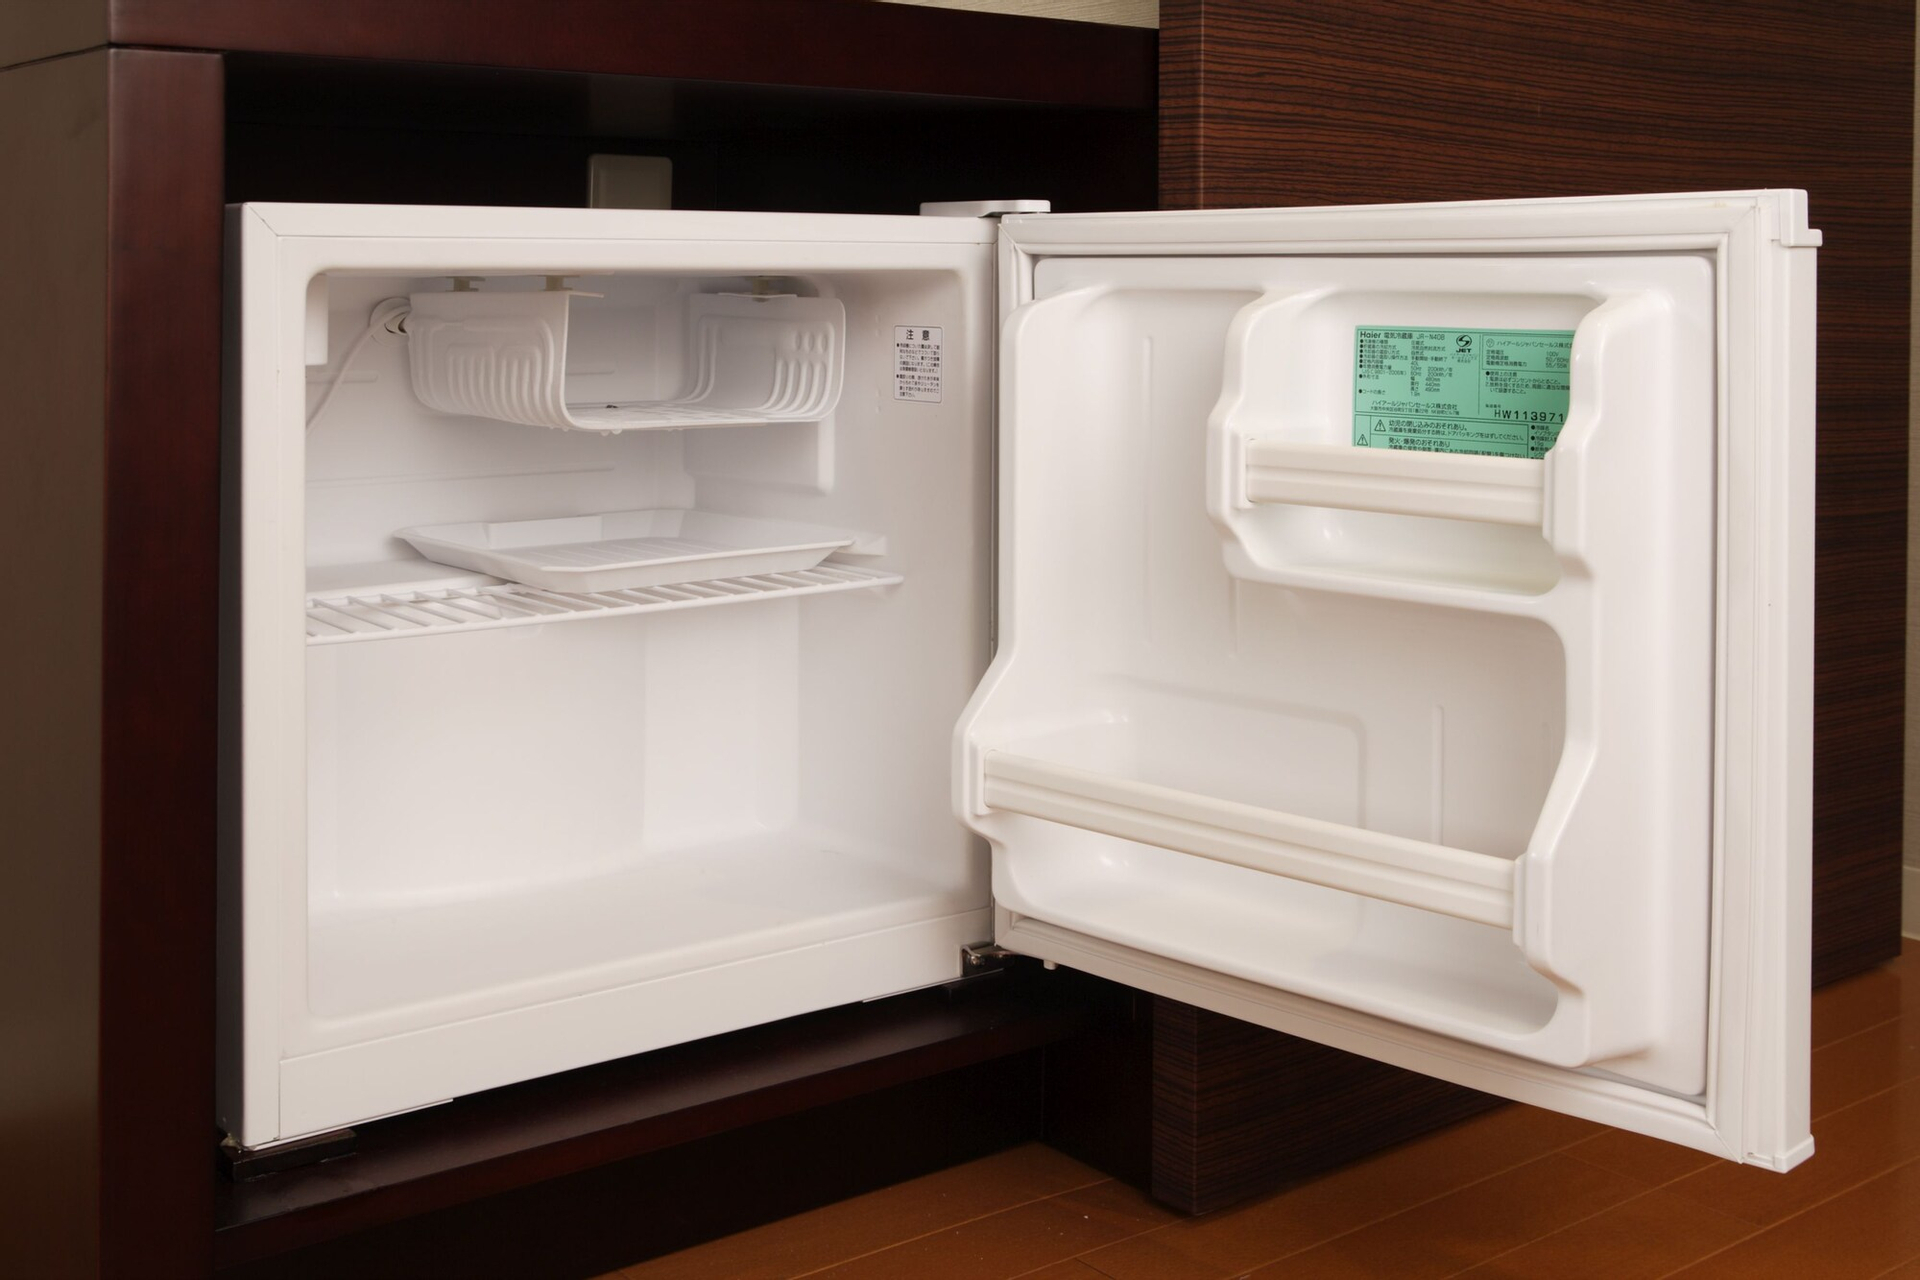 Mini-refrigerator 5